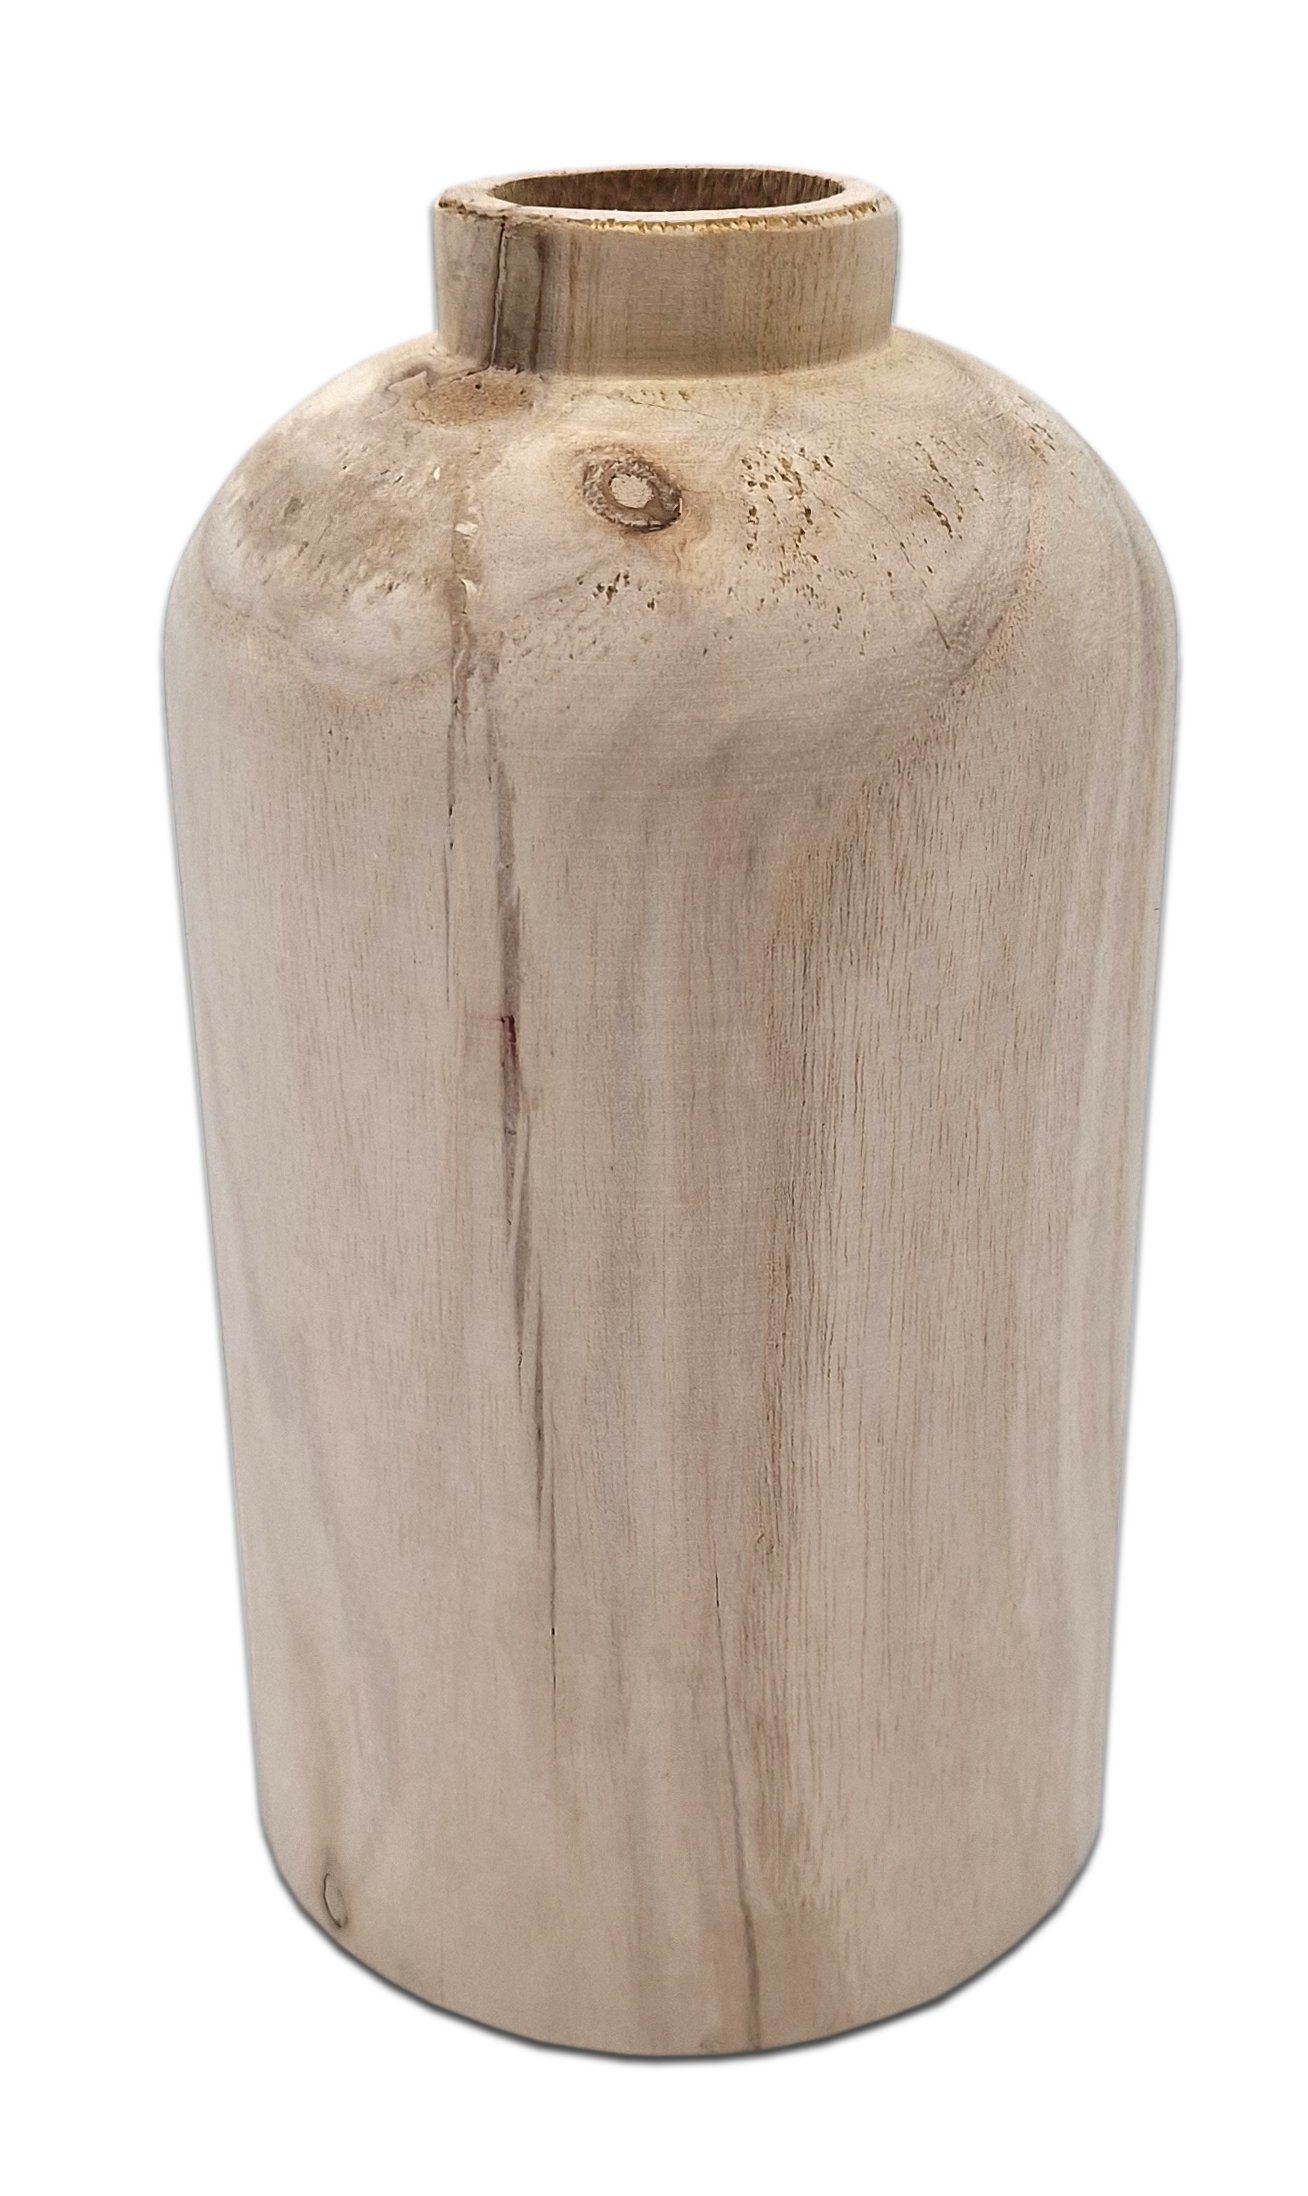 Holzvase (Packung, 1 cm Holz Blumen St., Dekovase Spetebo Vase Flasche Deko - naturbelassen natur 21 Design 1 Vase),